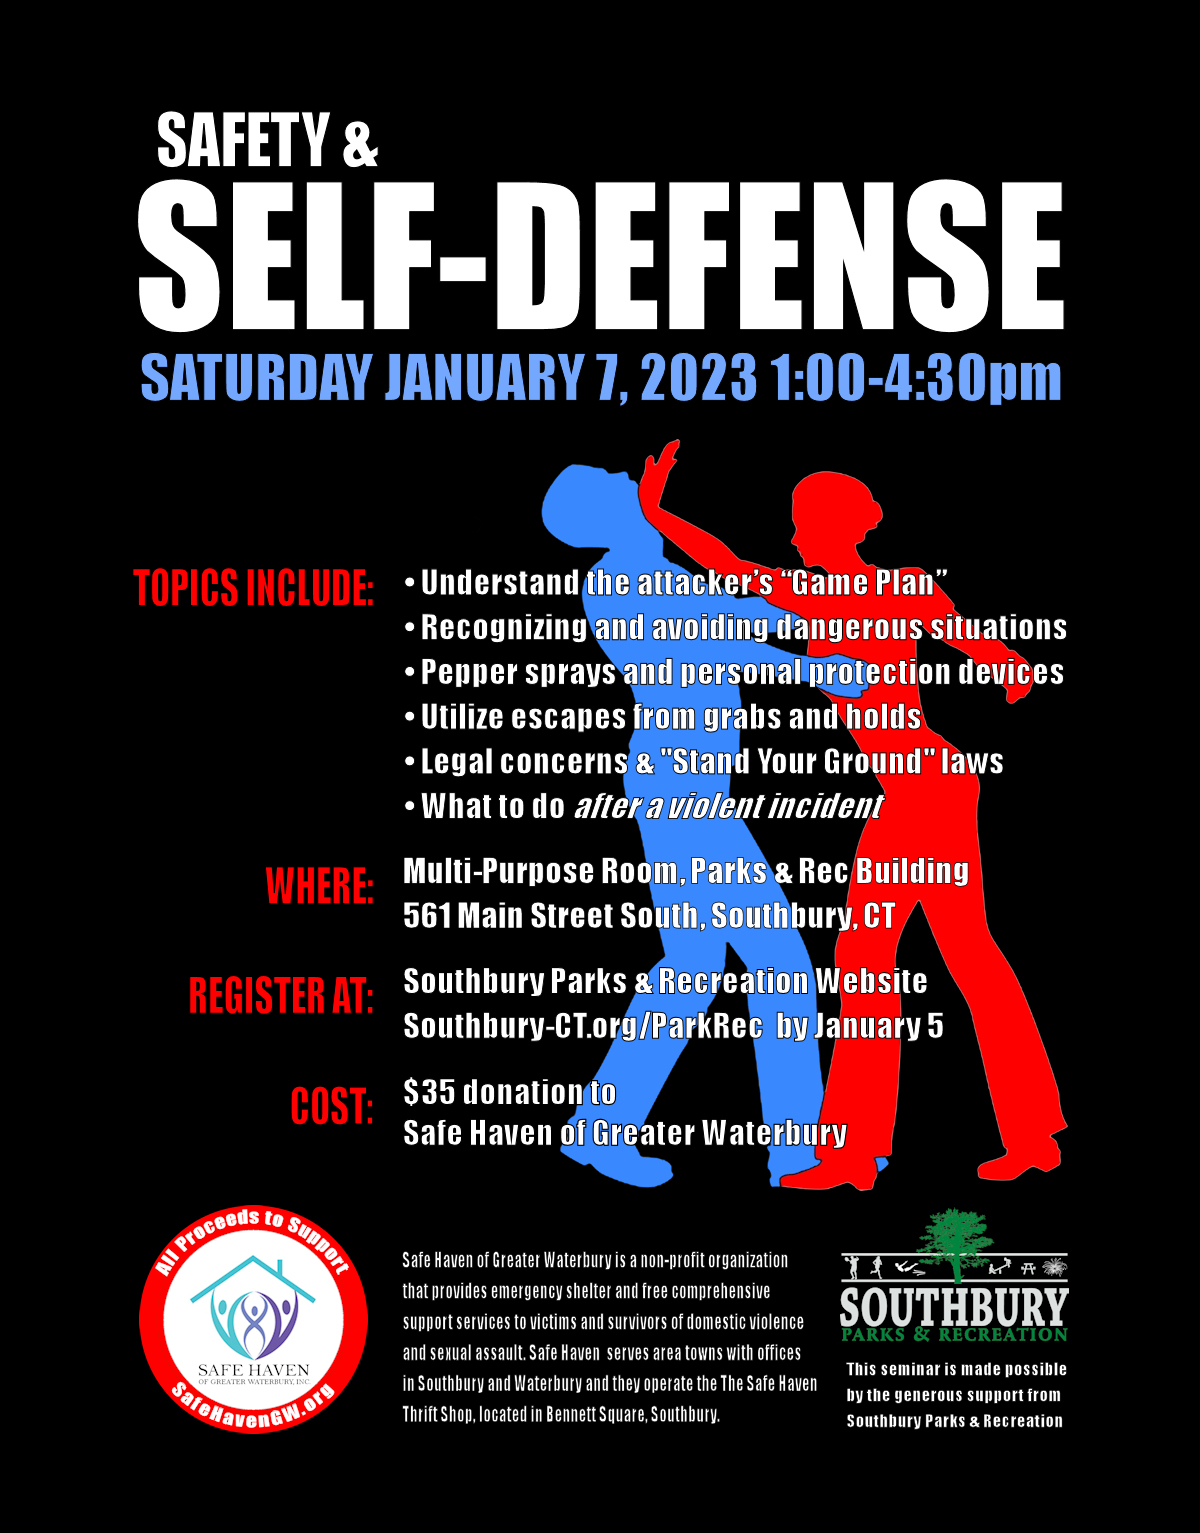 Safety & Self-Defense Seminar Raises Money For Shelter